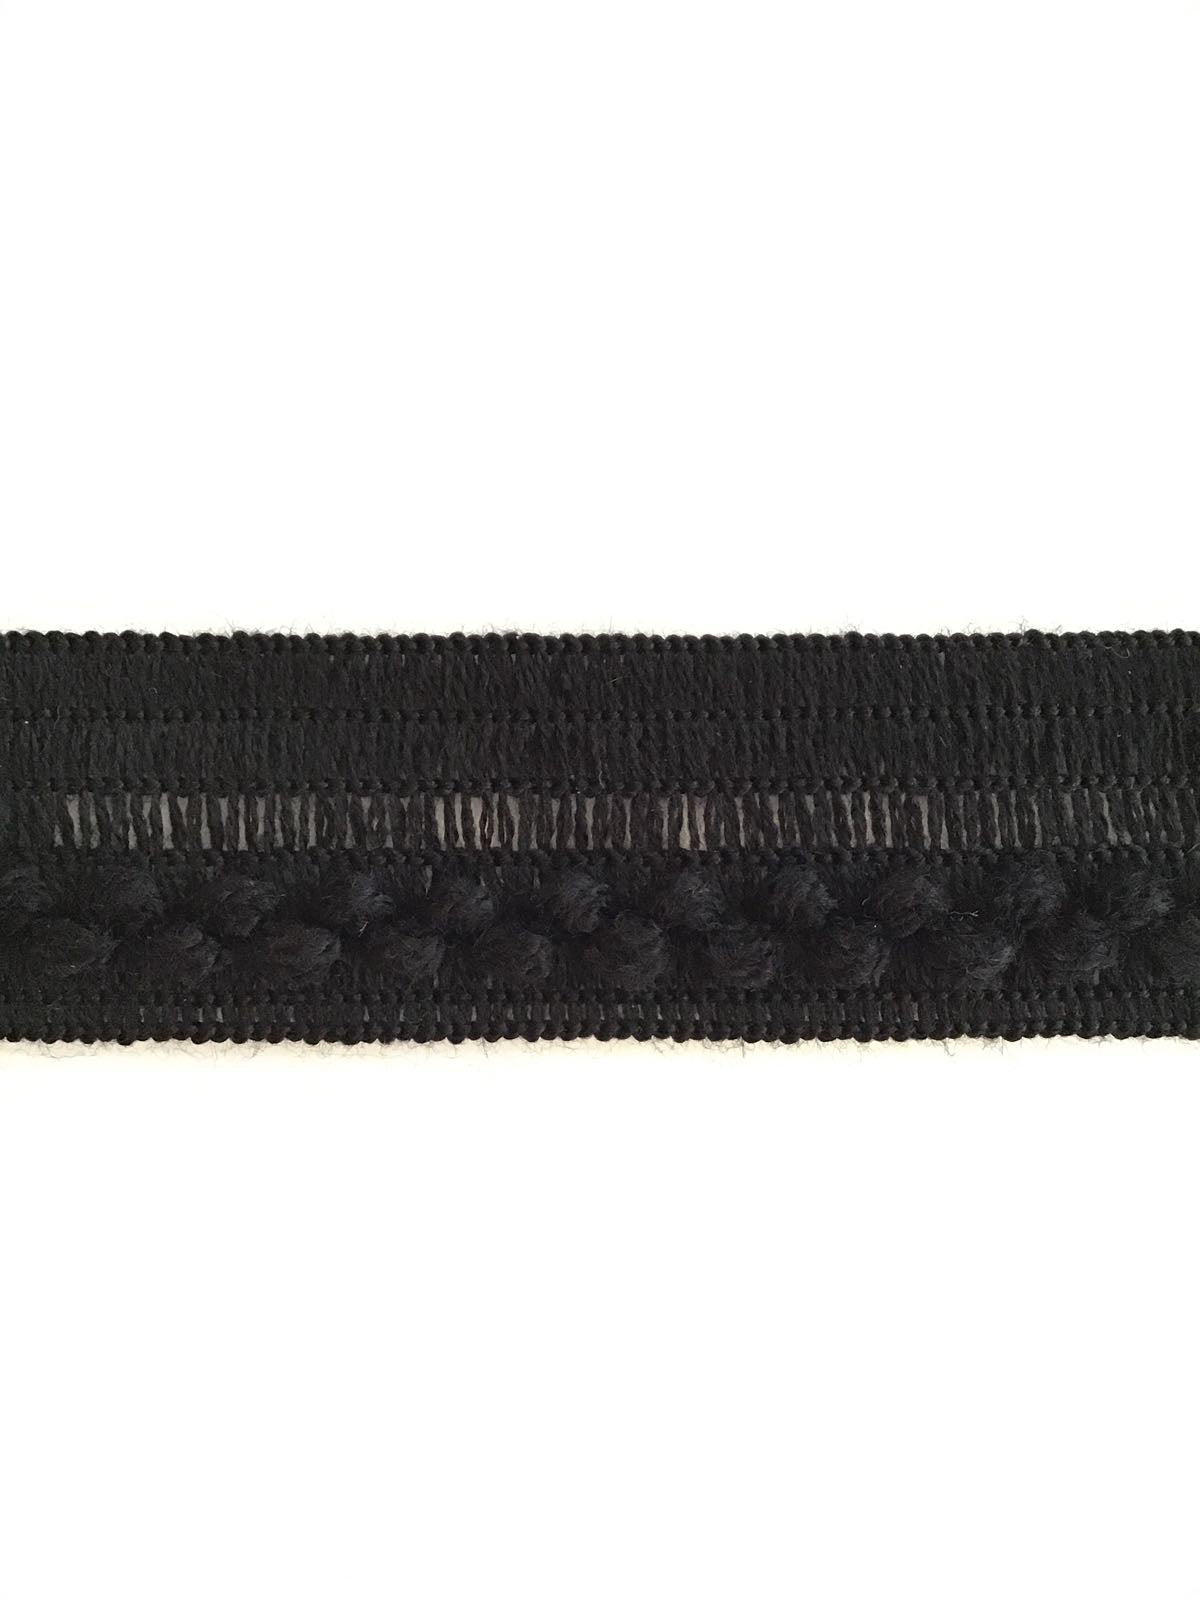 Yarn folding band 28 mm